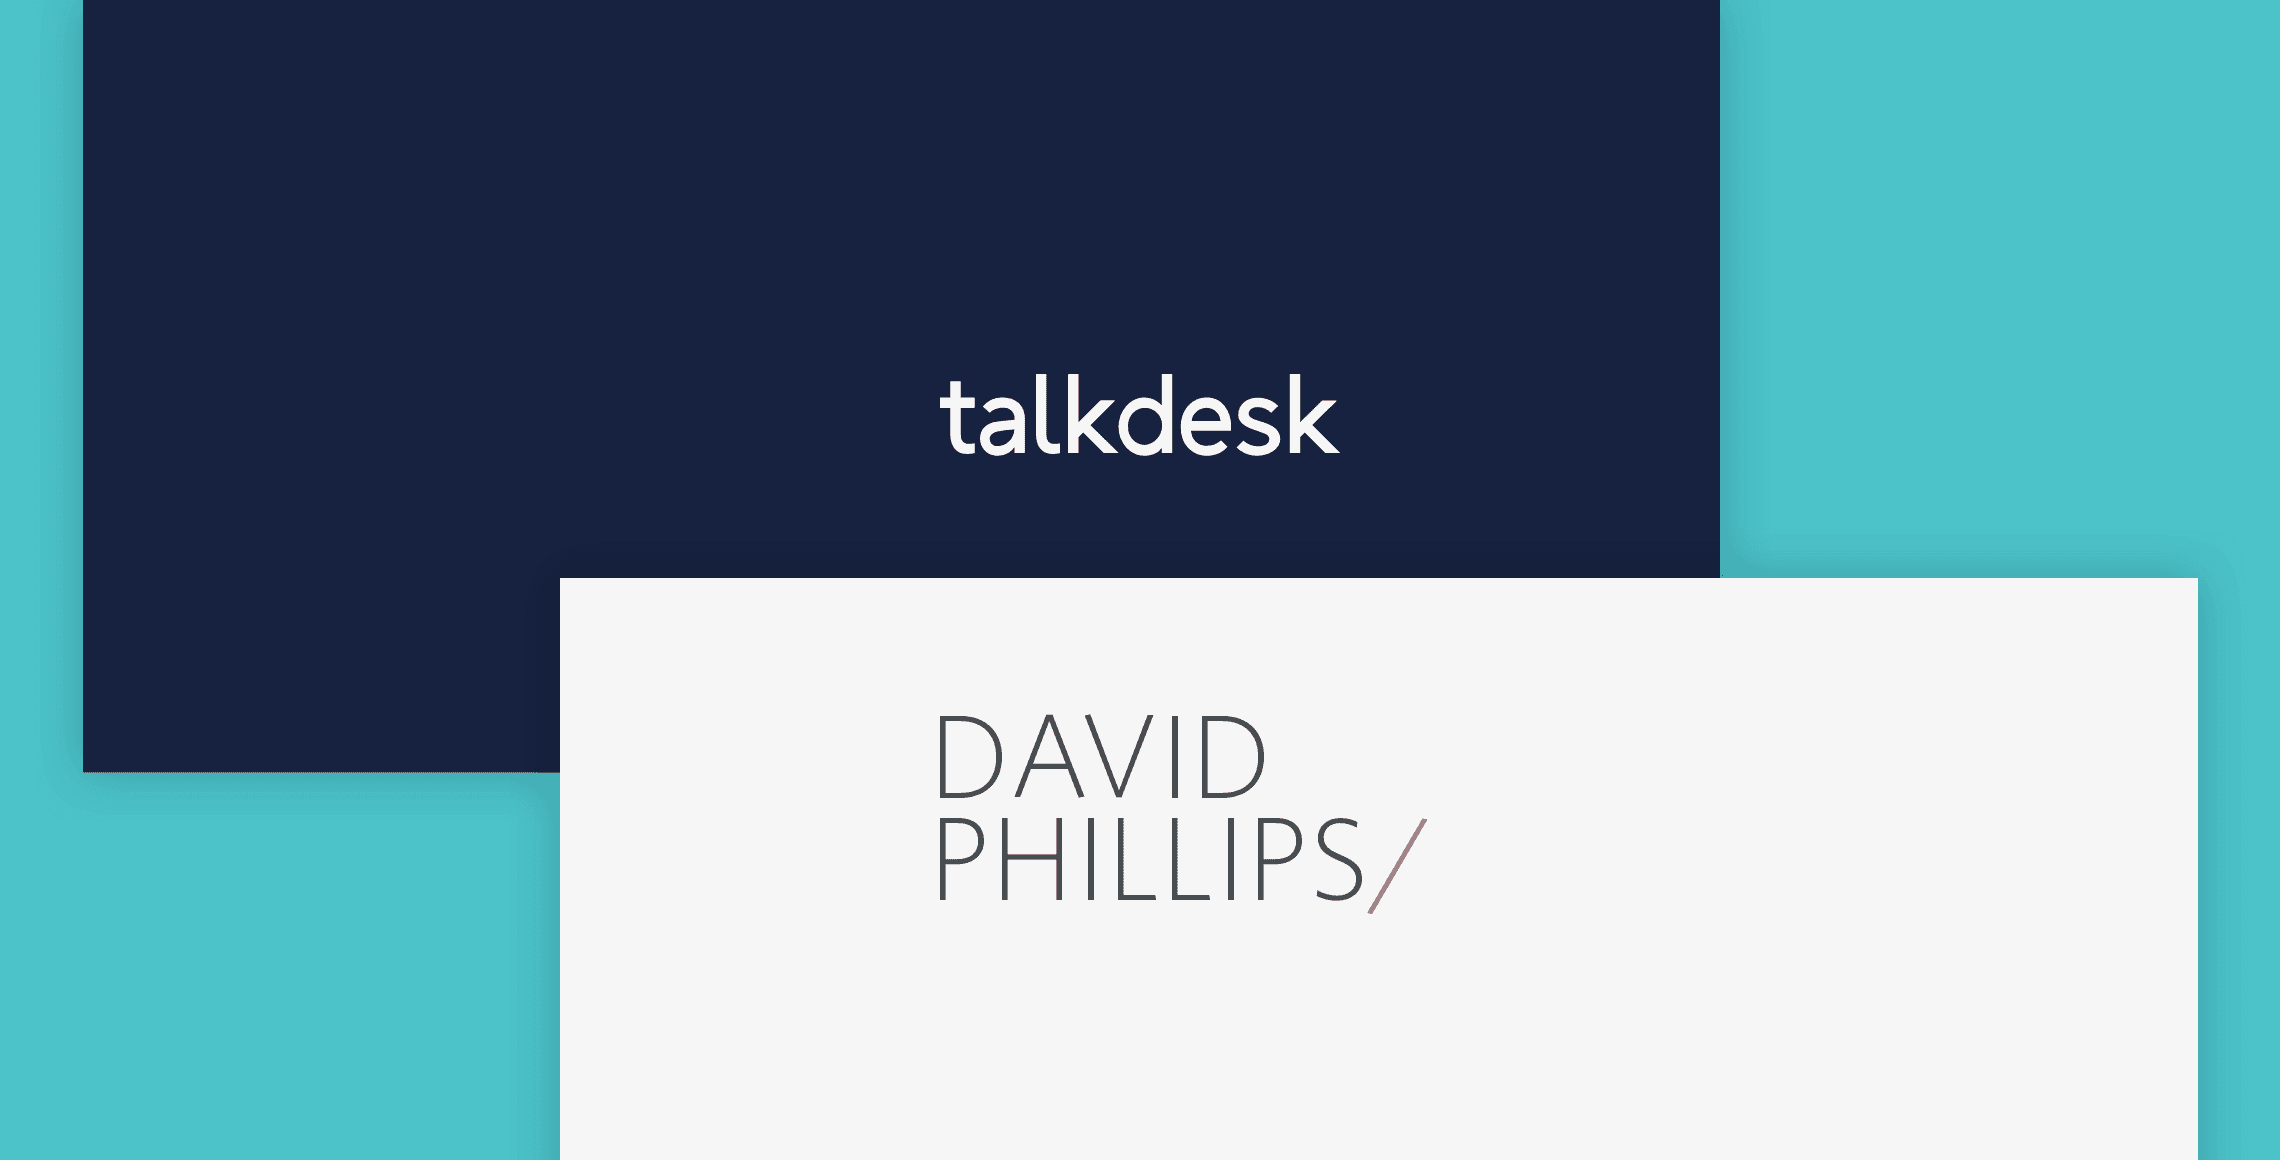 david phillips talkdesk